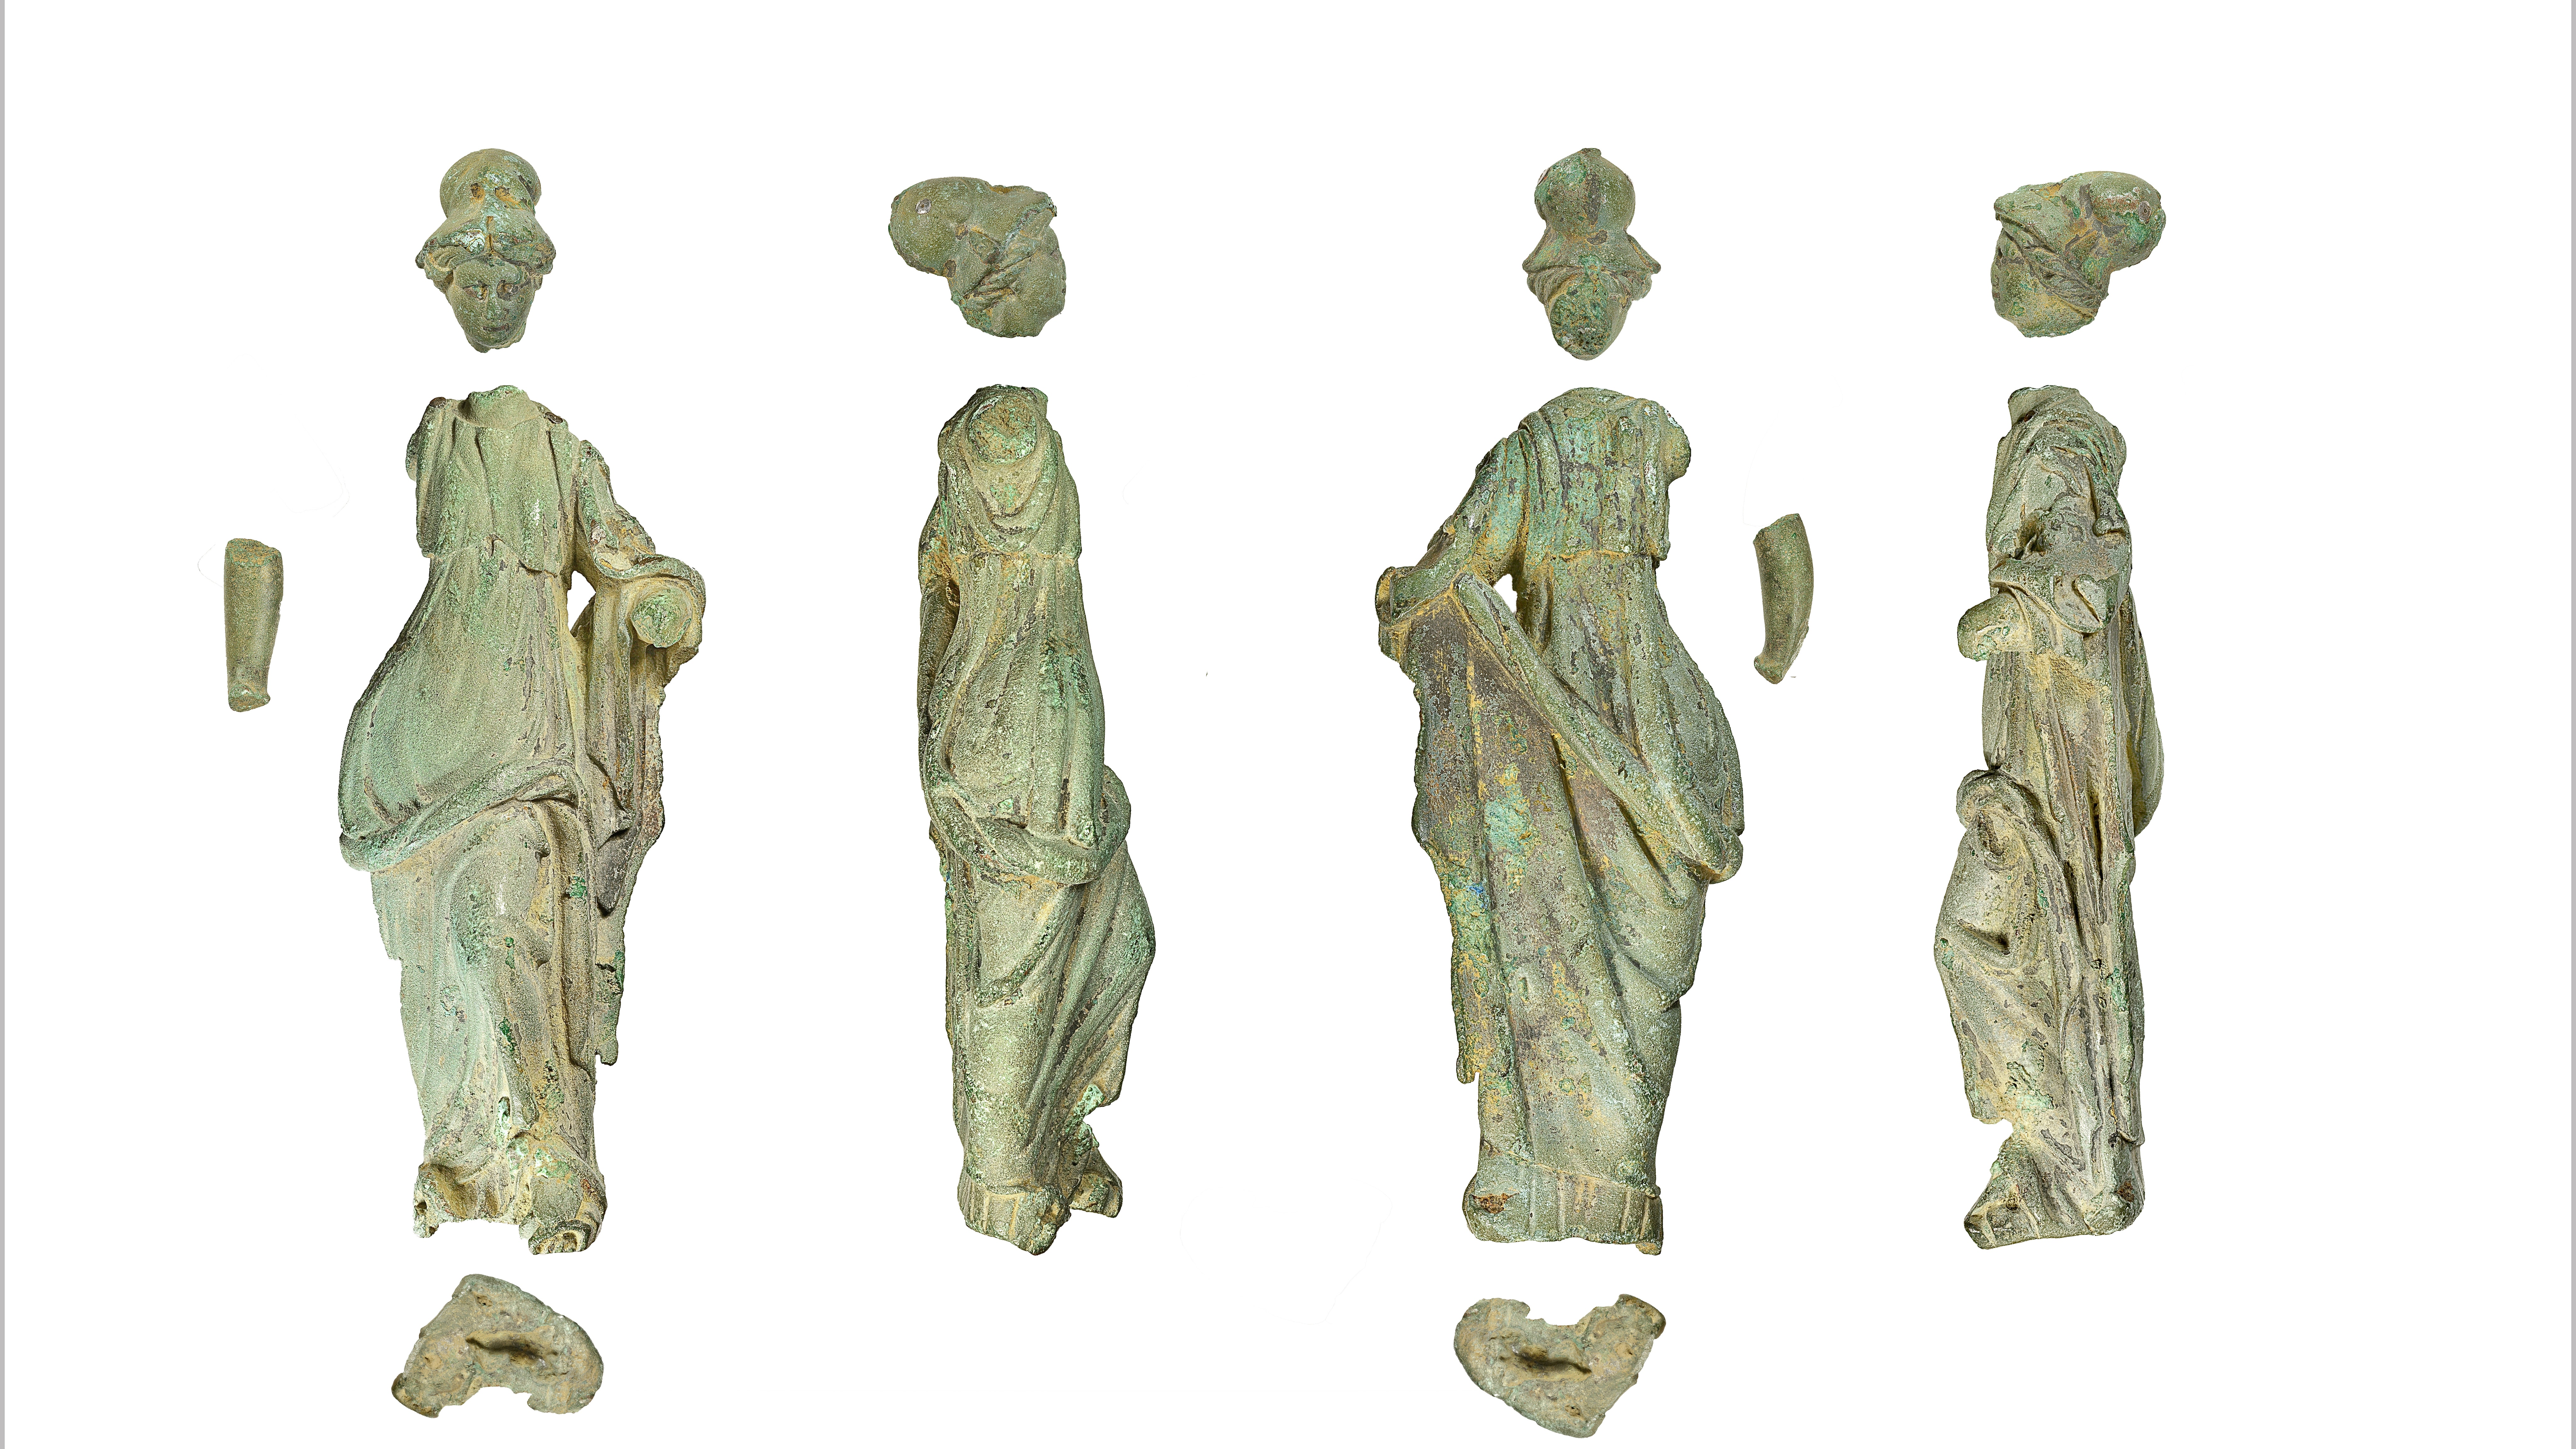 Roman Minerva statue in margarine tub among discovered treasures | BT